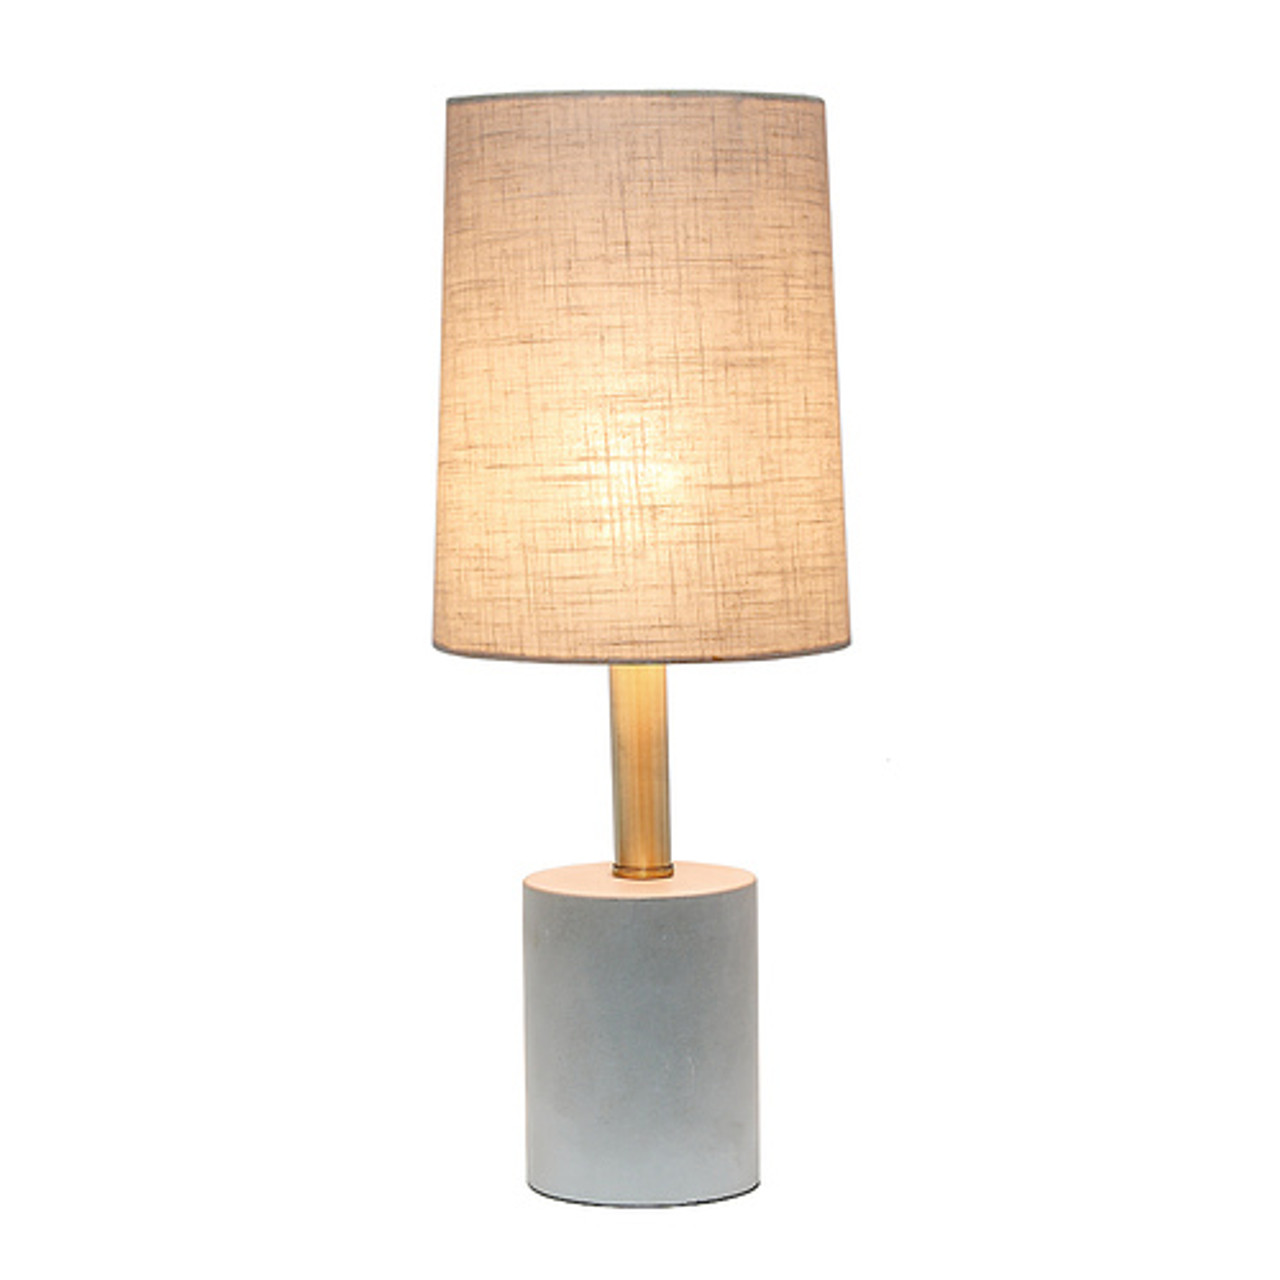 Lalia Home Antique Brass Concrete Table Lamp with Linen Shade, Khaki